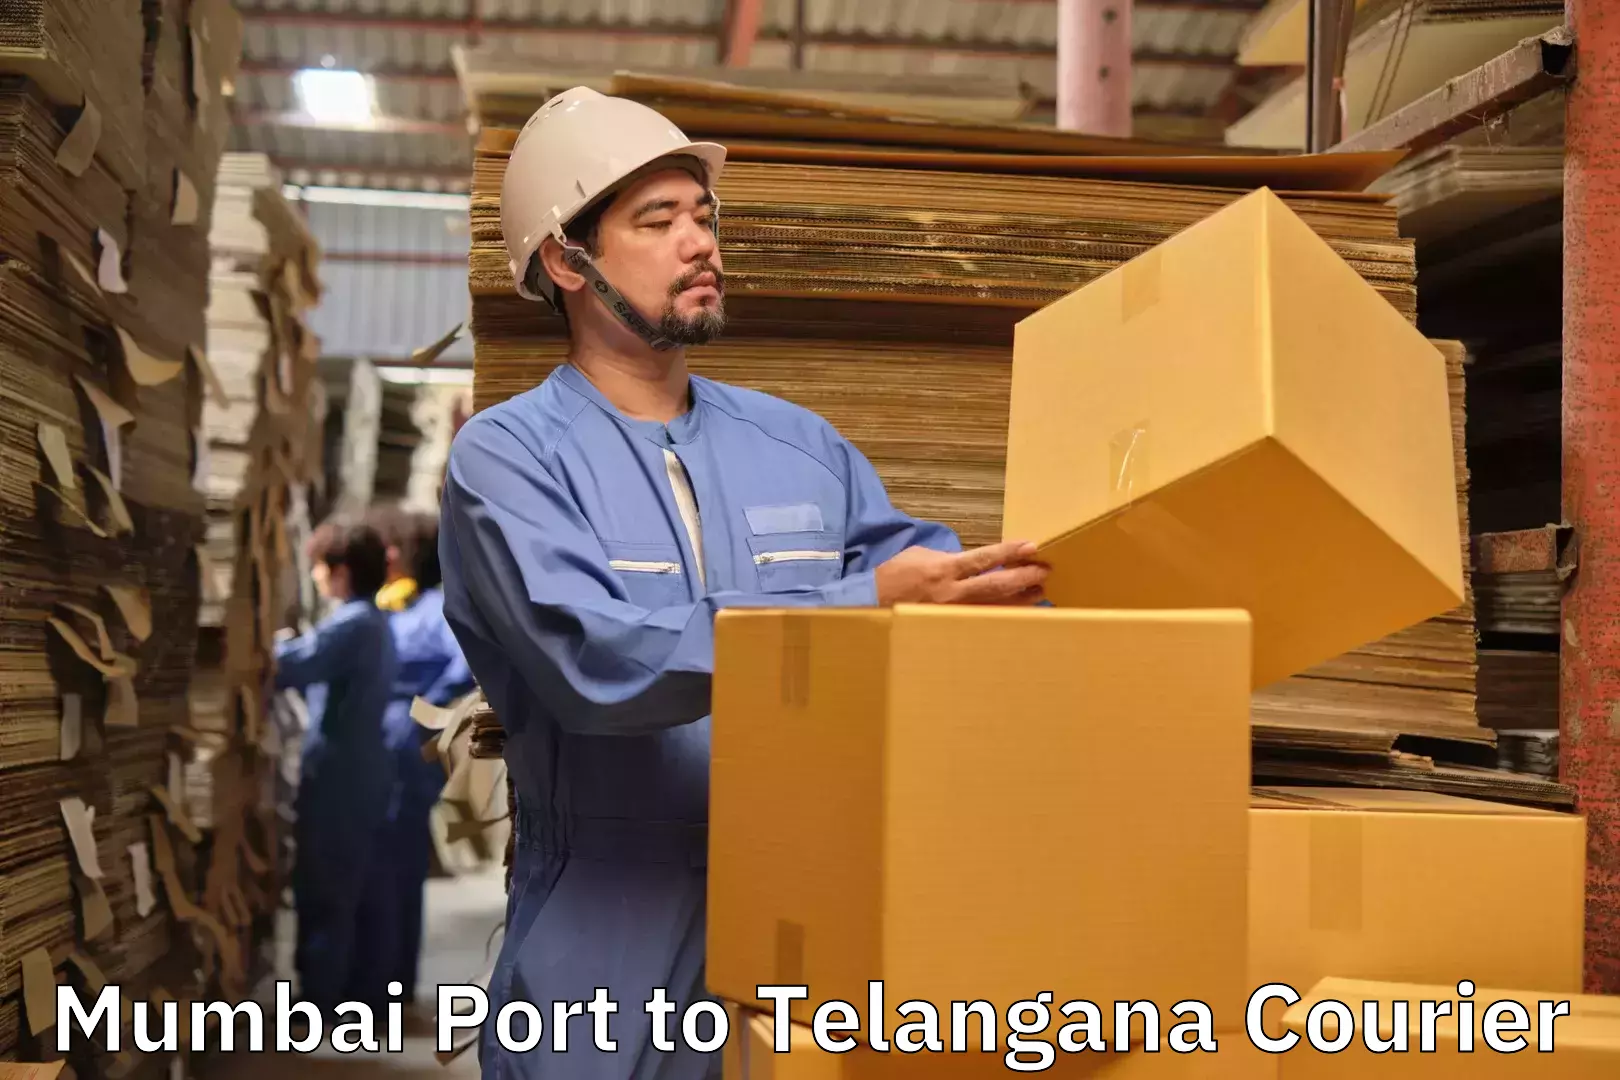 Luggage transport consultancy Mumbai Port to Narmetta